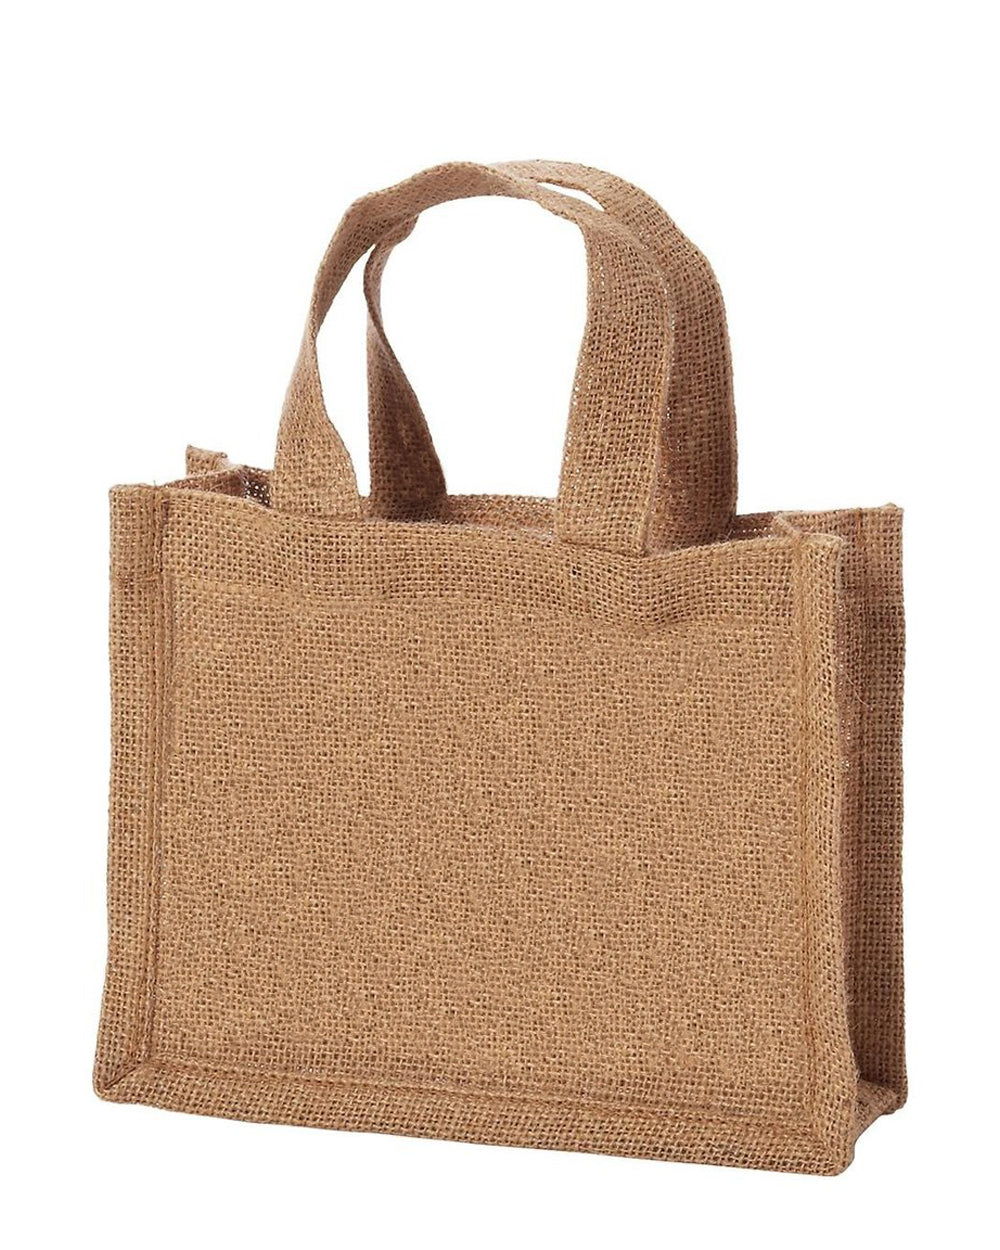 50) 22x36 Burlap Bags Wholesale Bulk - Sacks Potato Race Sandbags Home  Depot | eBay